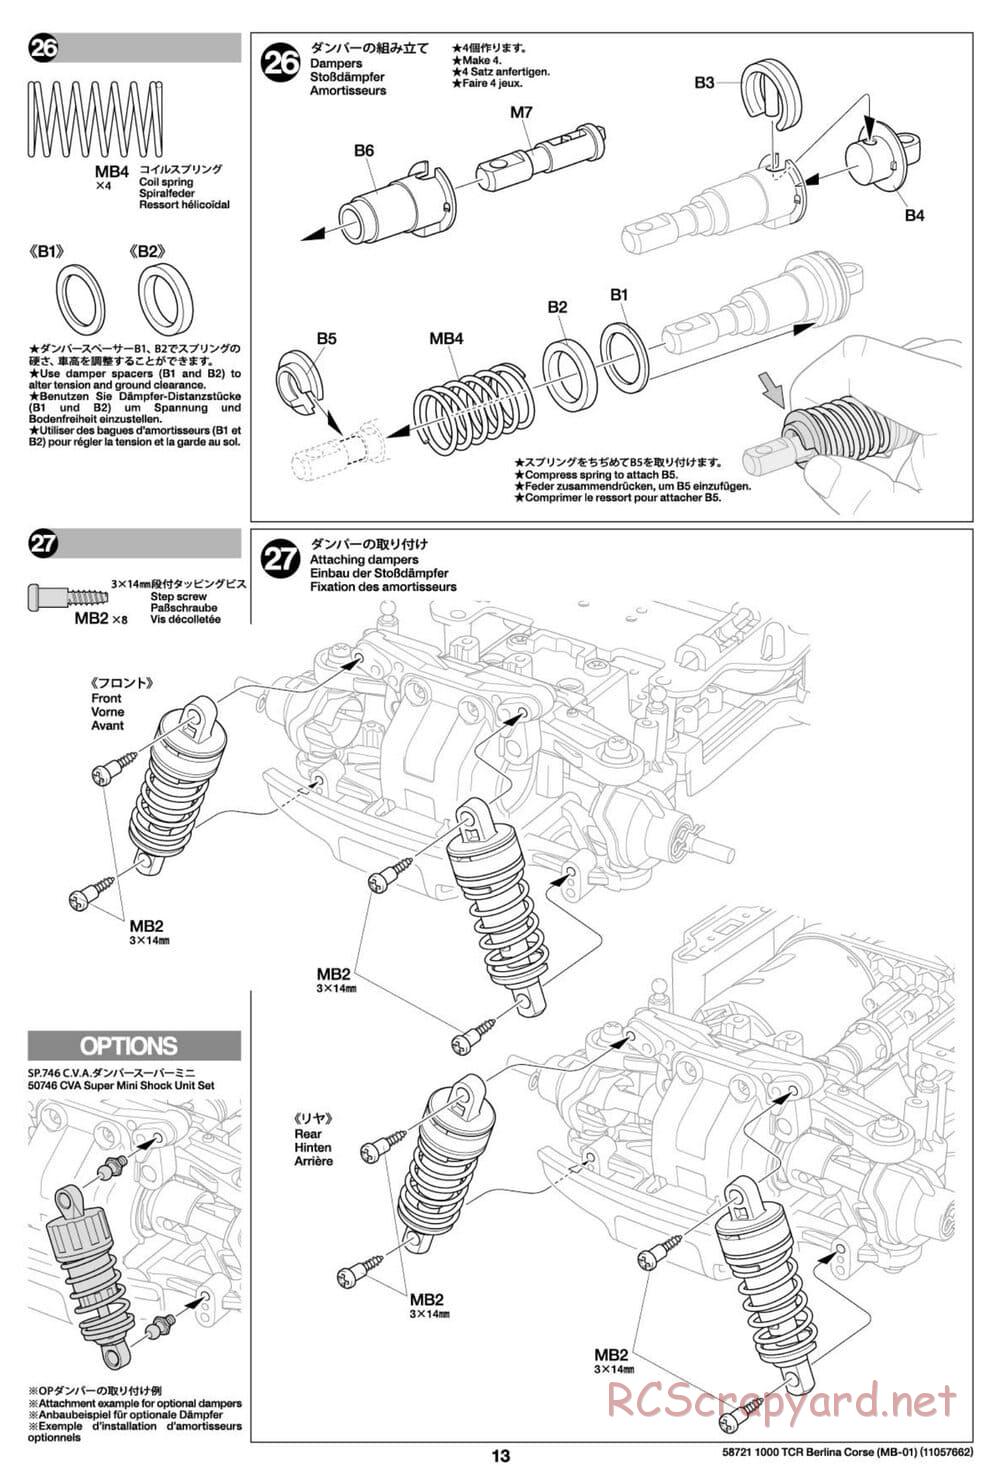 Tamiya - Fiat Abarth 1000 TCR Berlina Corsa - MB-01 Chassis - Manual - Page 13